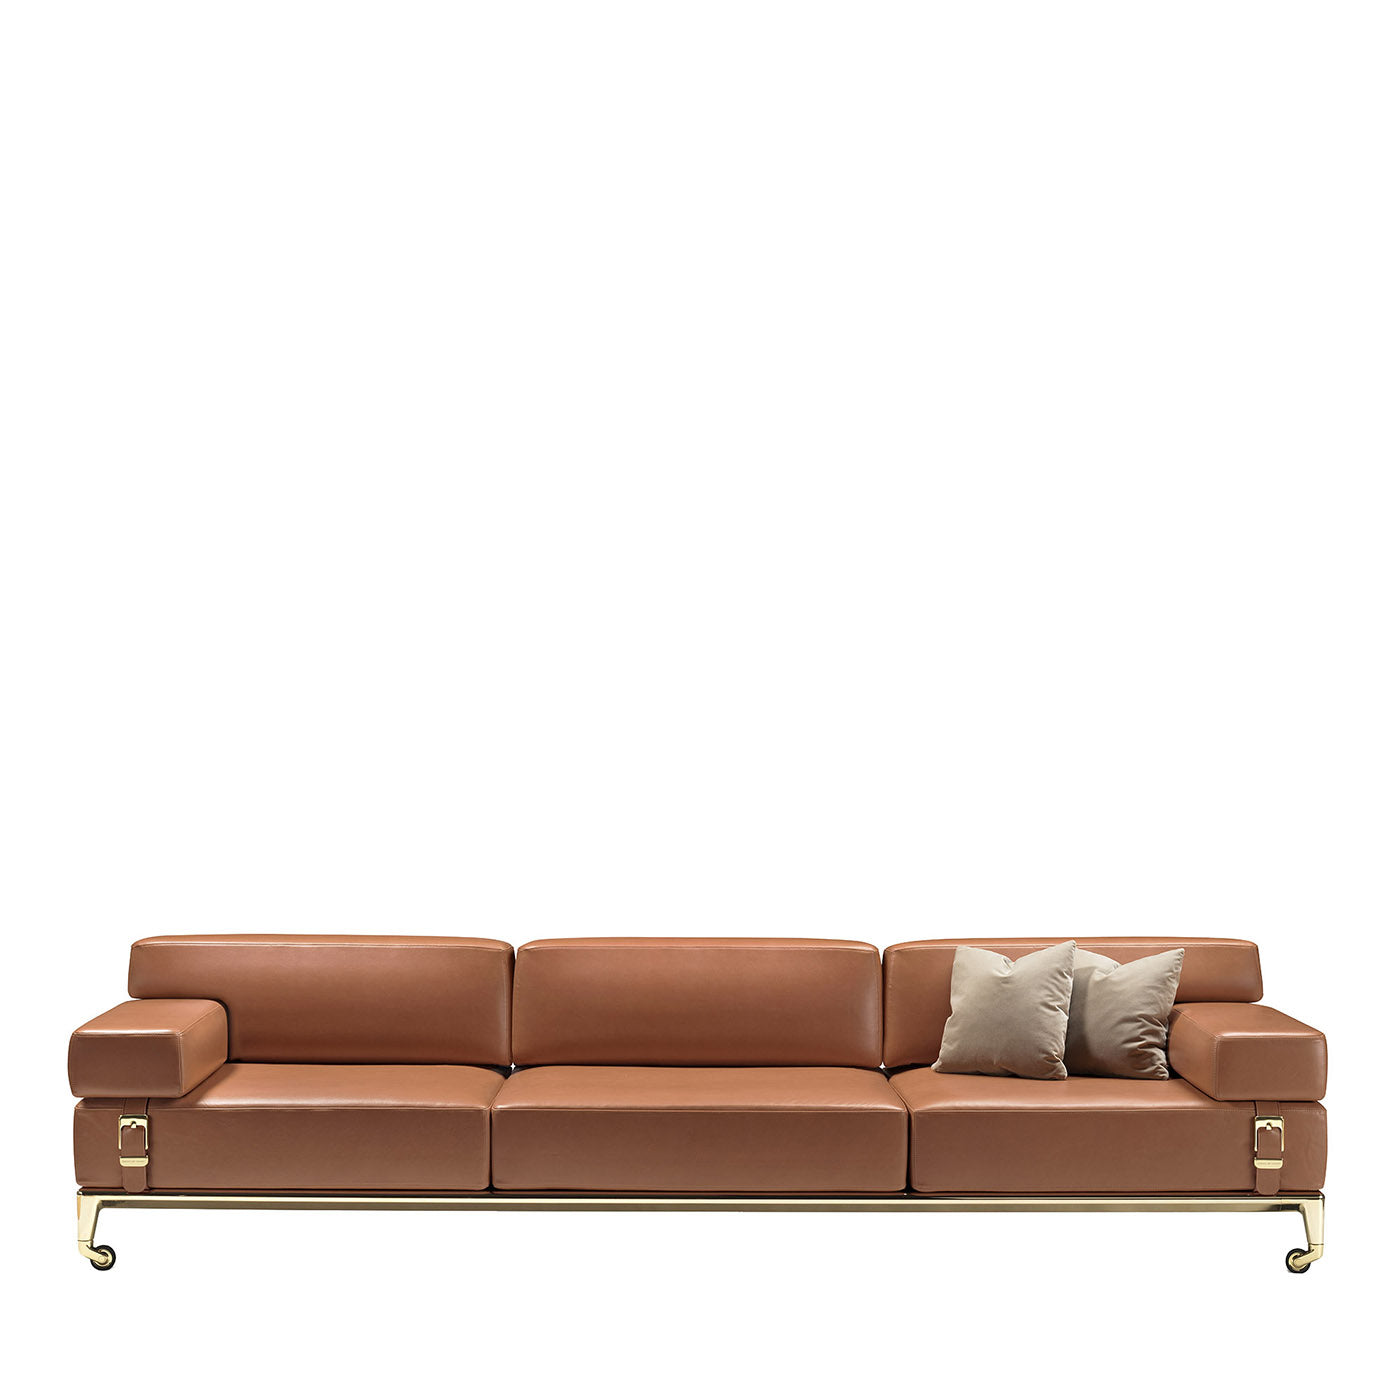 Shaker 3-sitzer orange sofa by Stefano Giovannoni - Hauptansicht